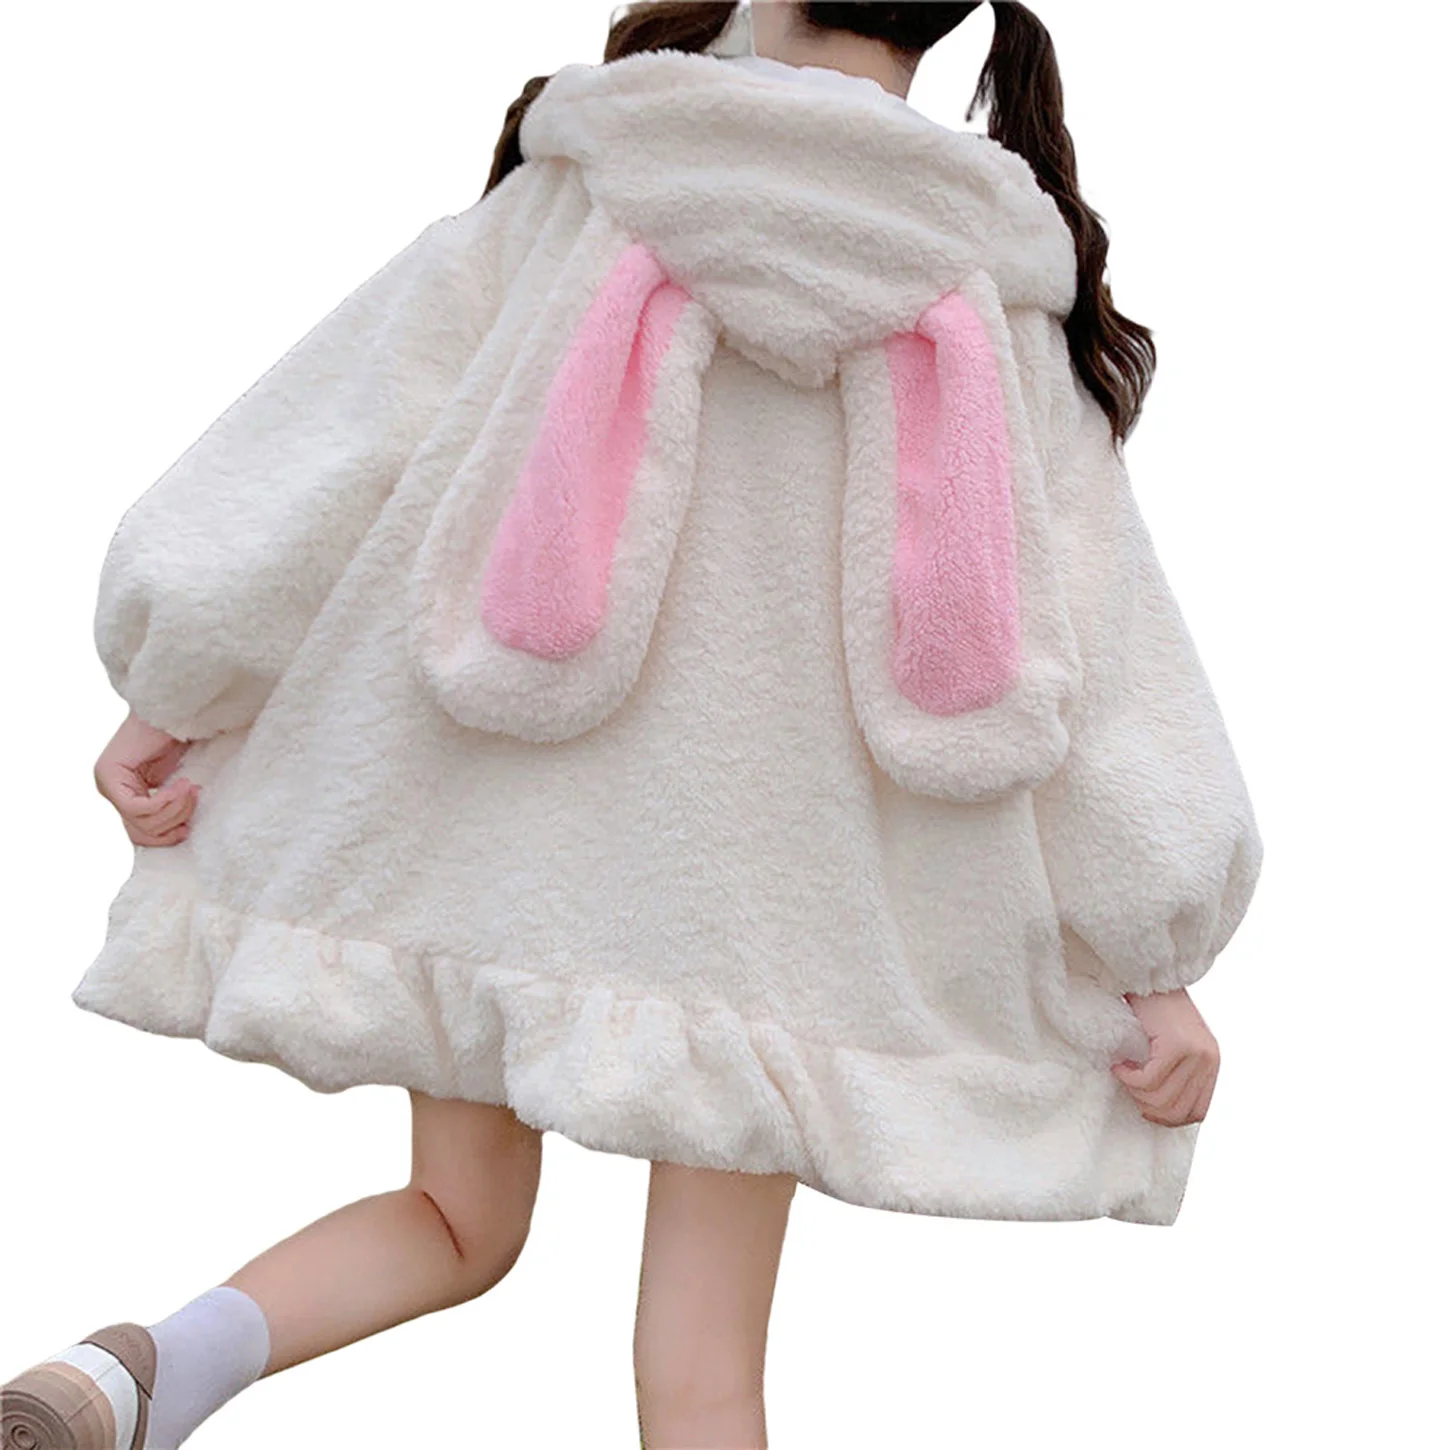 

Girl Cute Bunny Ear Hoodie Fuzzy Fluffy Long Sleeve Sweatshirt with Pom Poms for Autumn Winter